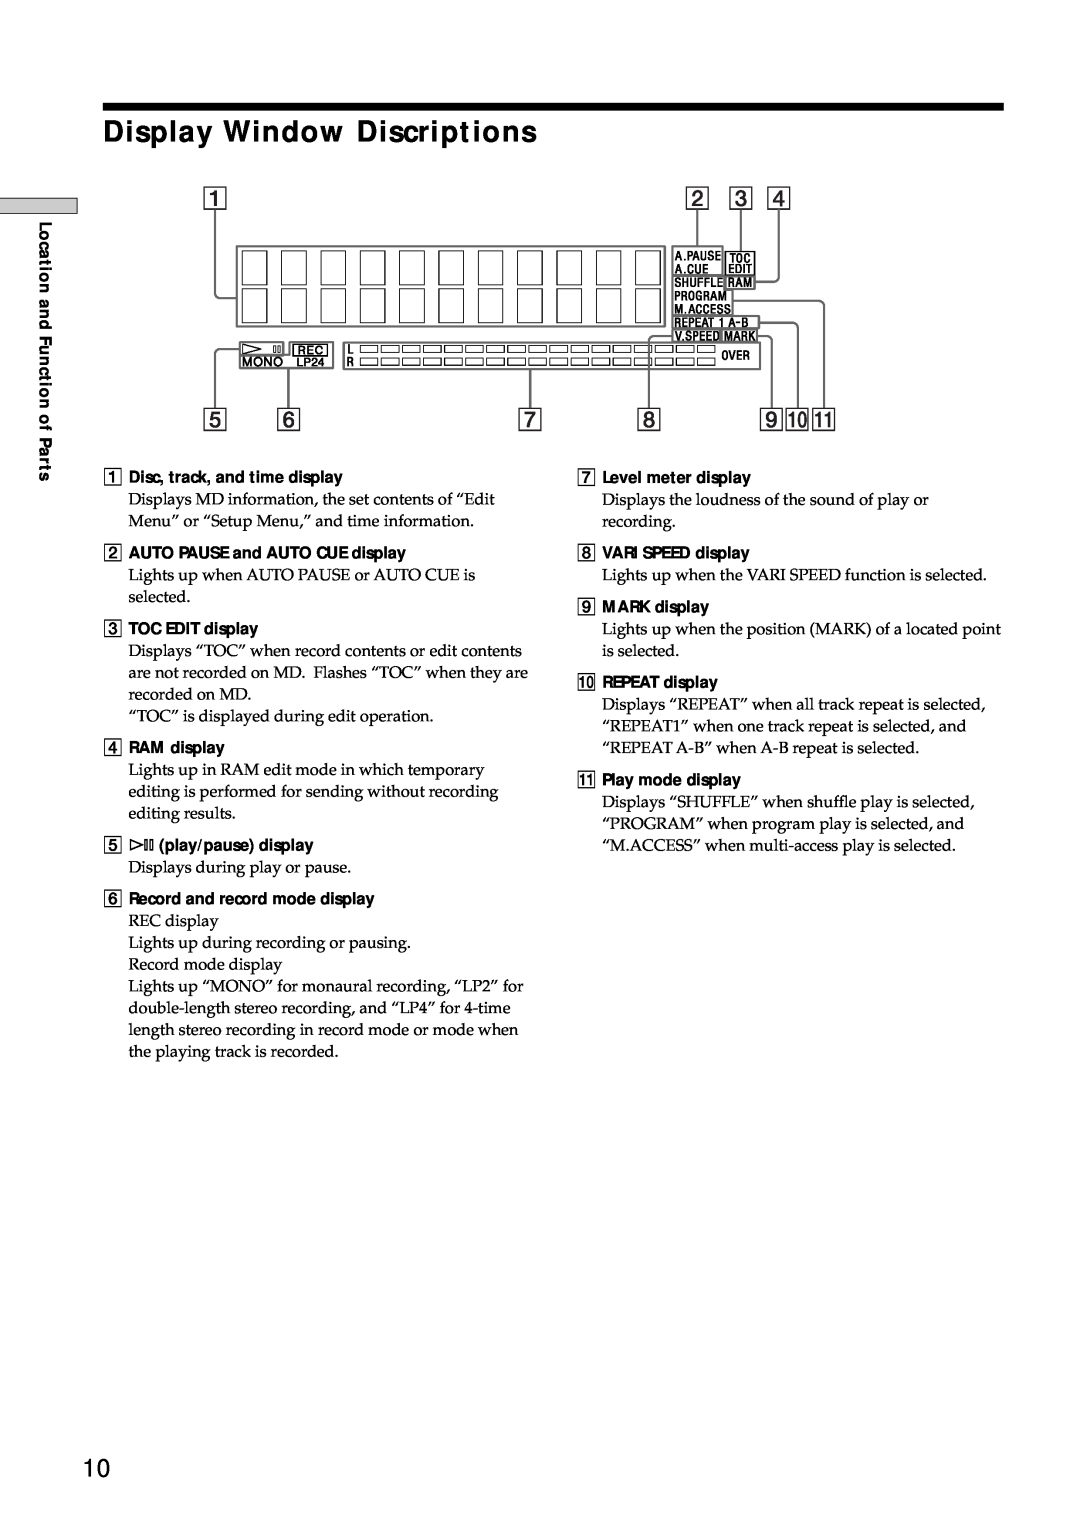 Sony MDS-E12 operating instructions Display Window Discriptions, 9q qa 